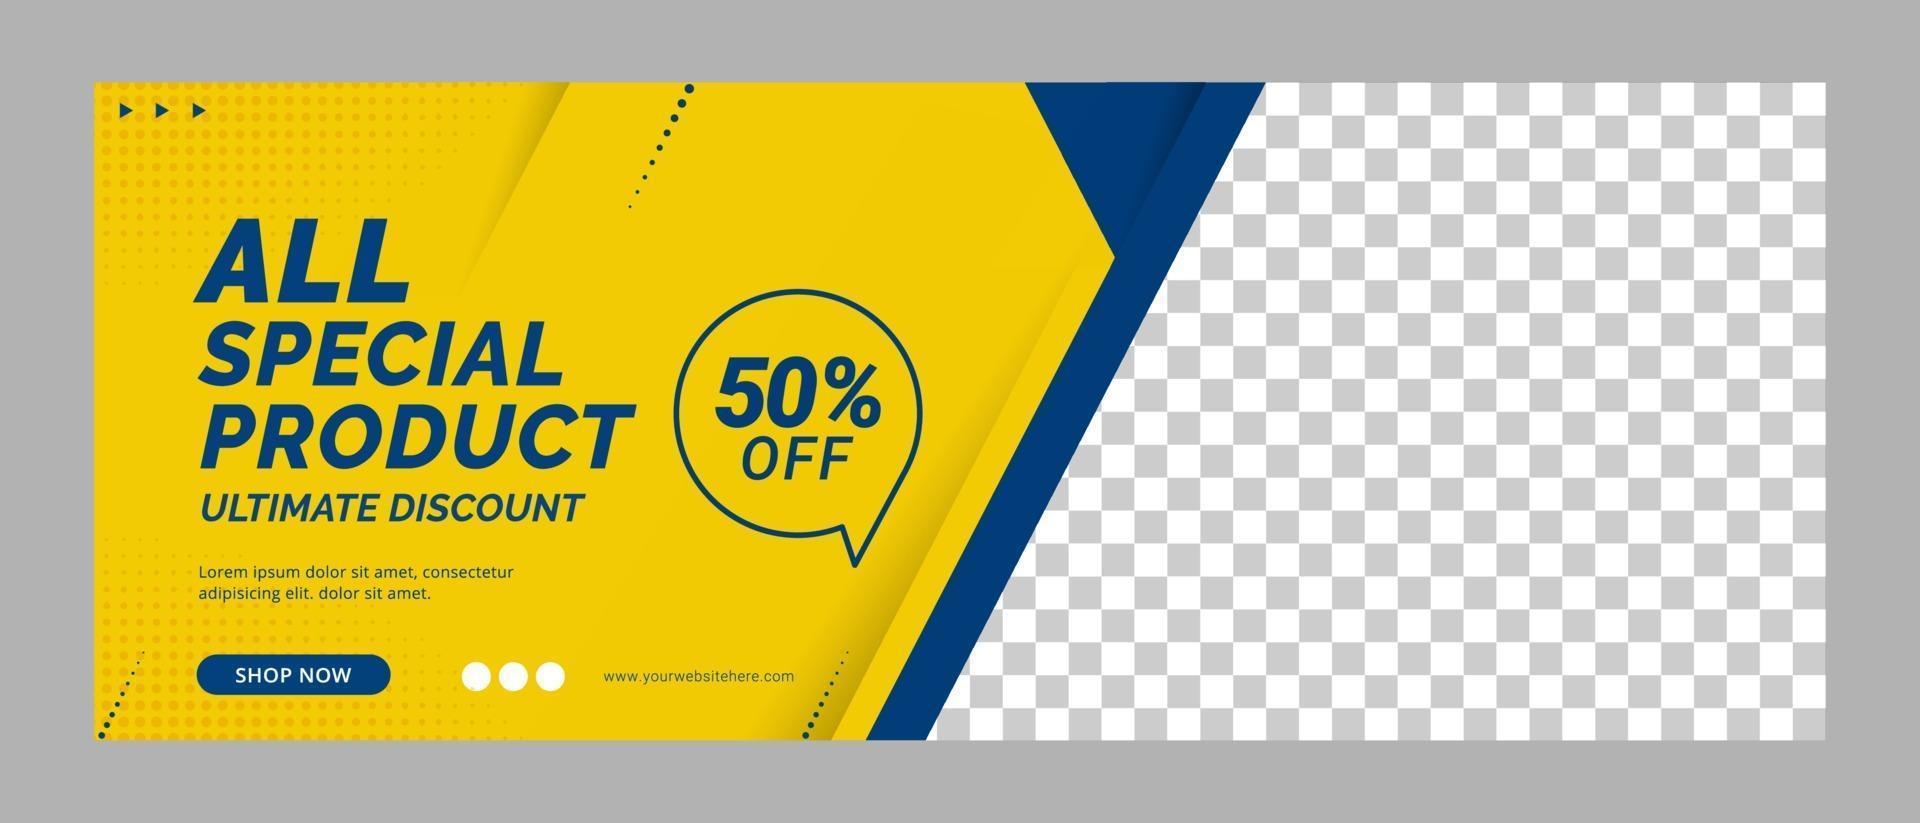 Big sale banner cover social media design template promotion vector